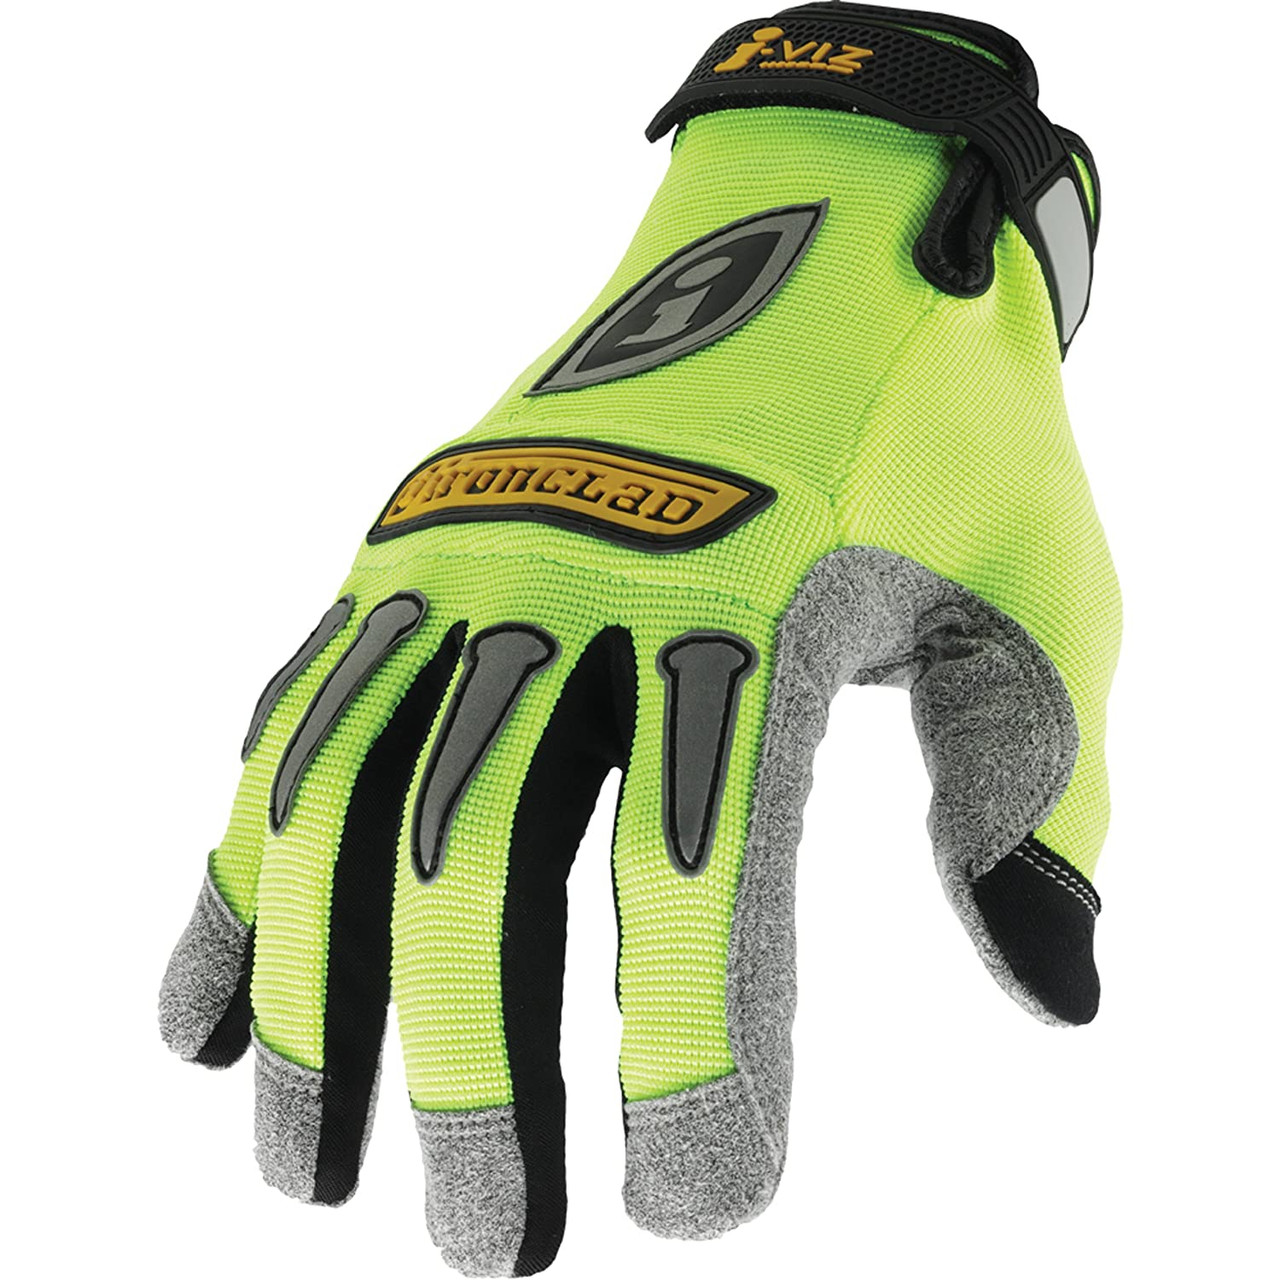 Ironclad IVG-02-S I-Viz Reflective Gloves, Reflective Lime Green, Small